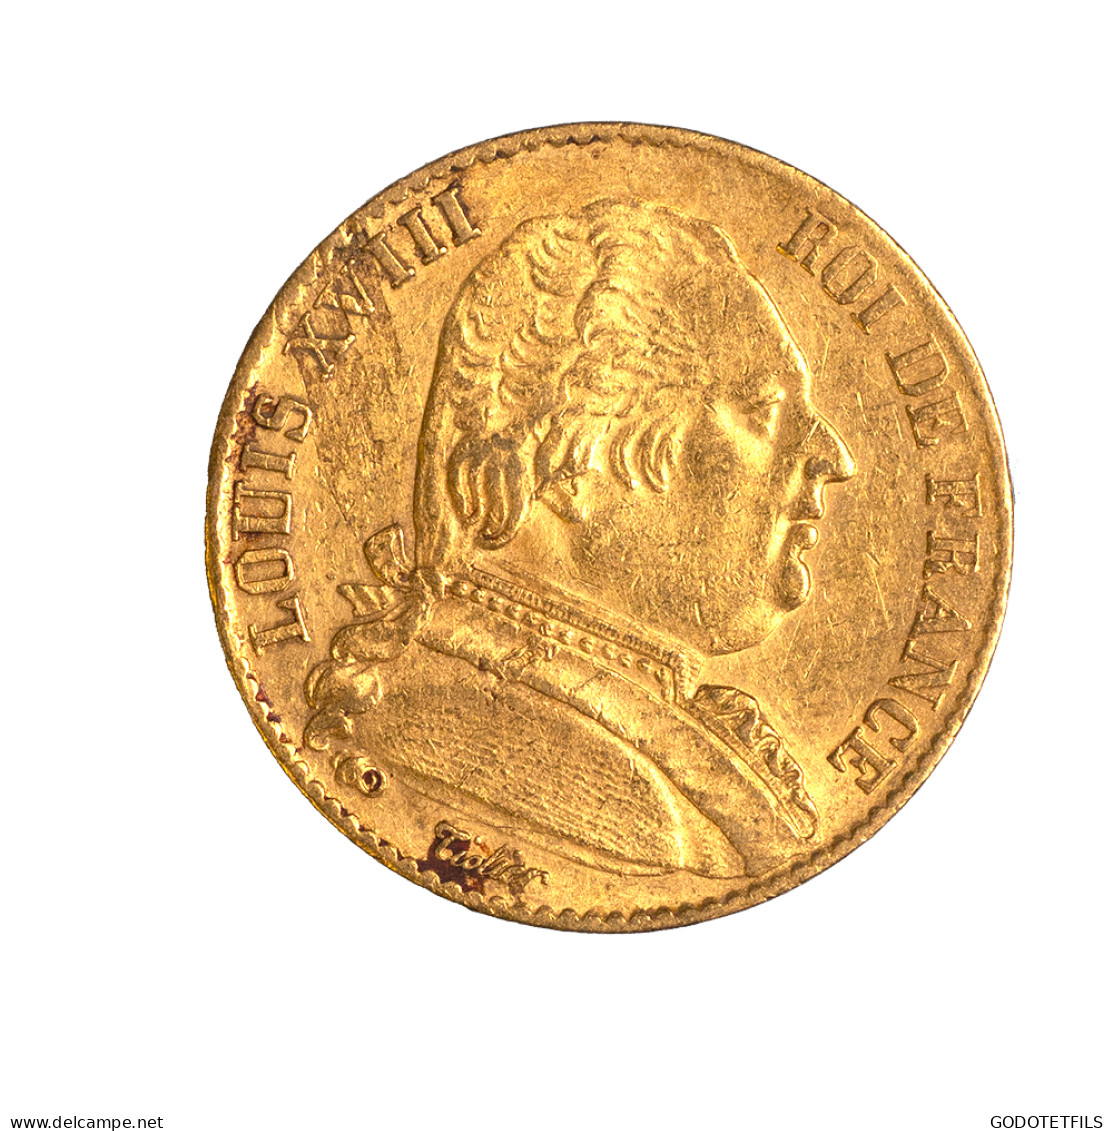 Louis XVIII-20 Francs 1814 Paris - 20 Francs (oro)